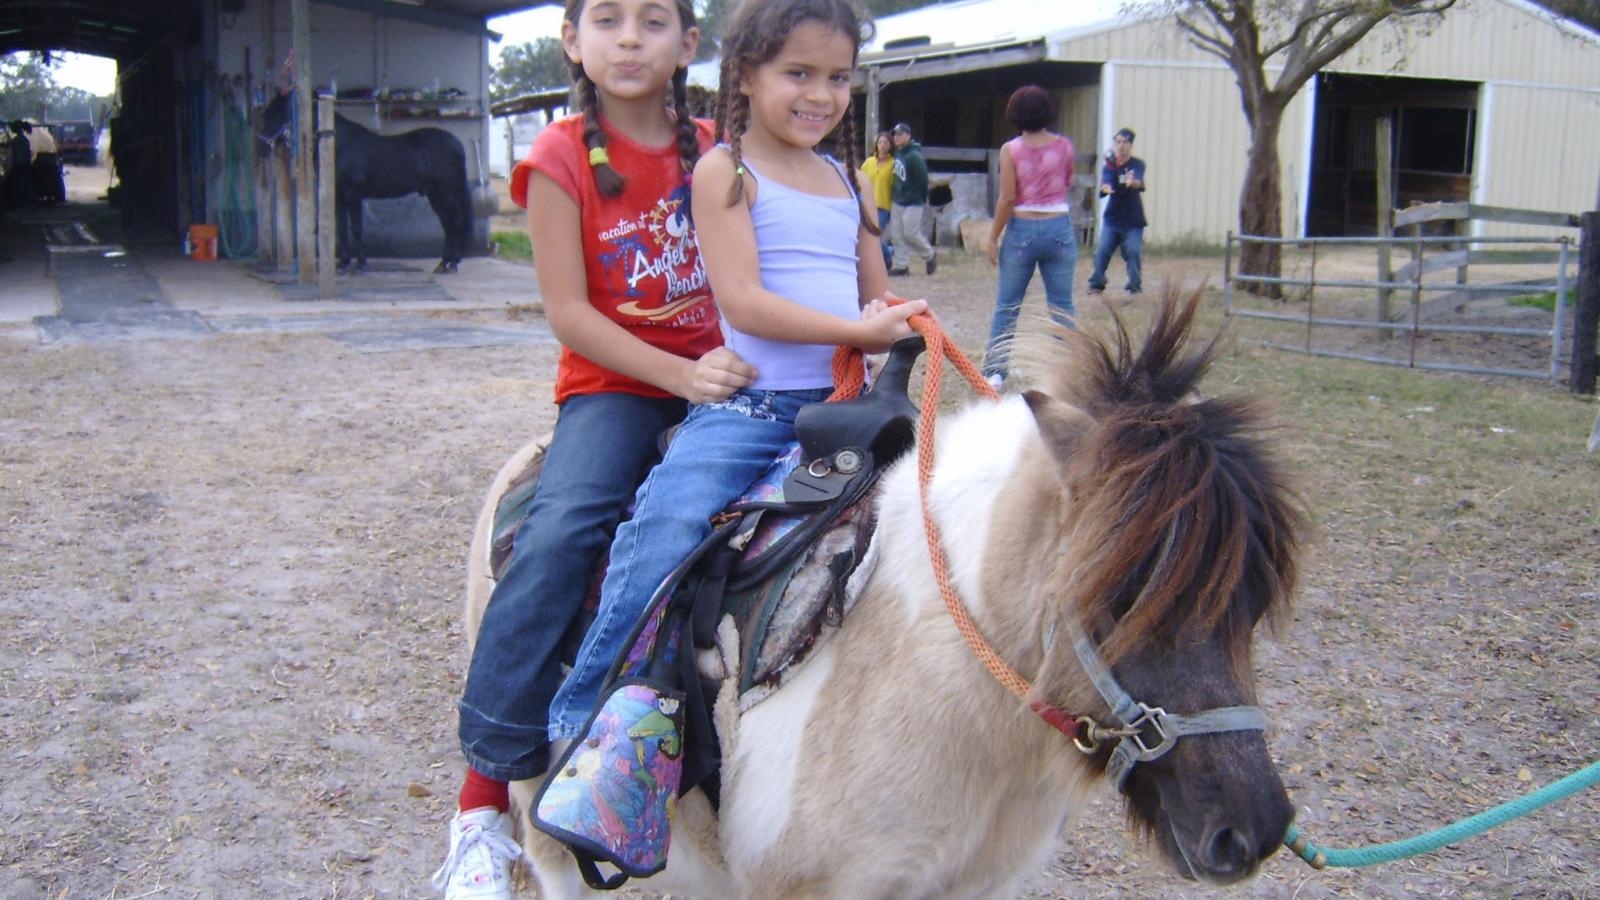 In Puerto Rico riding horses